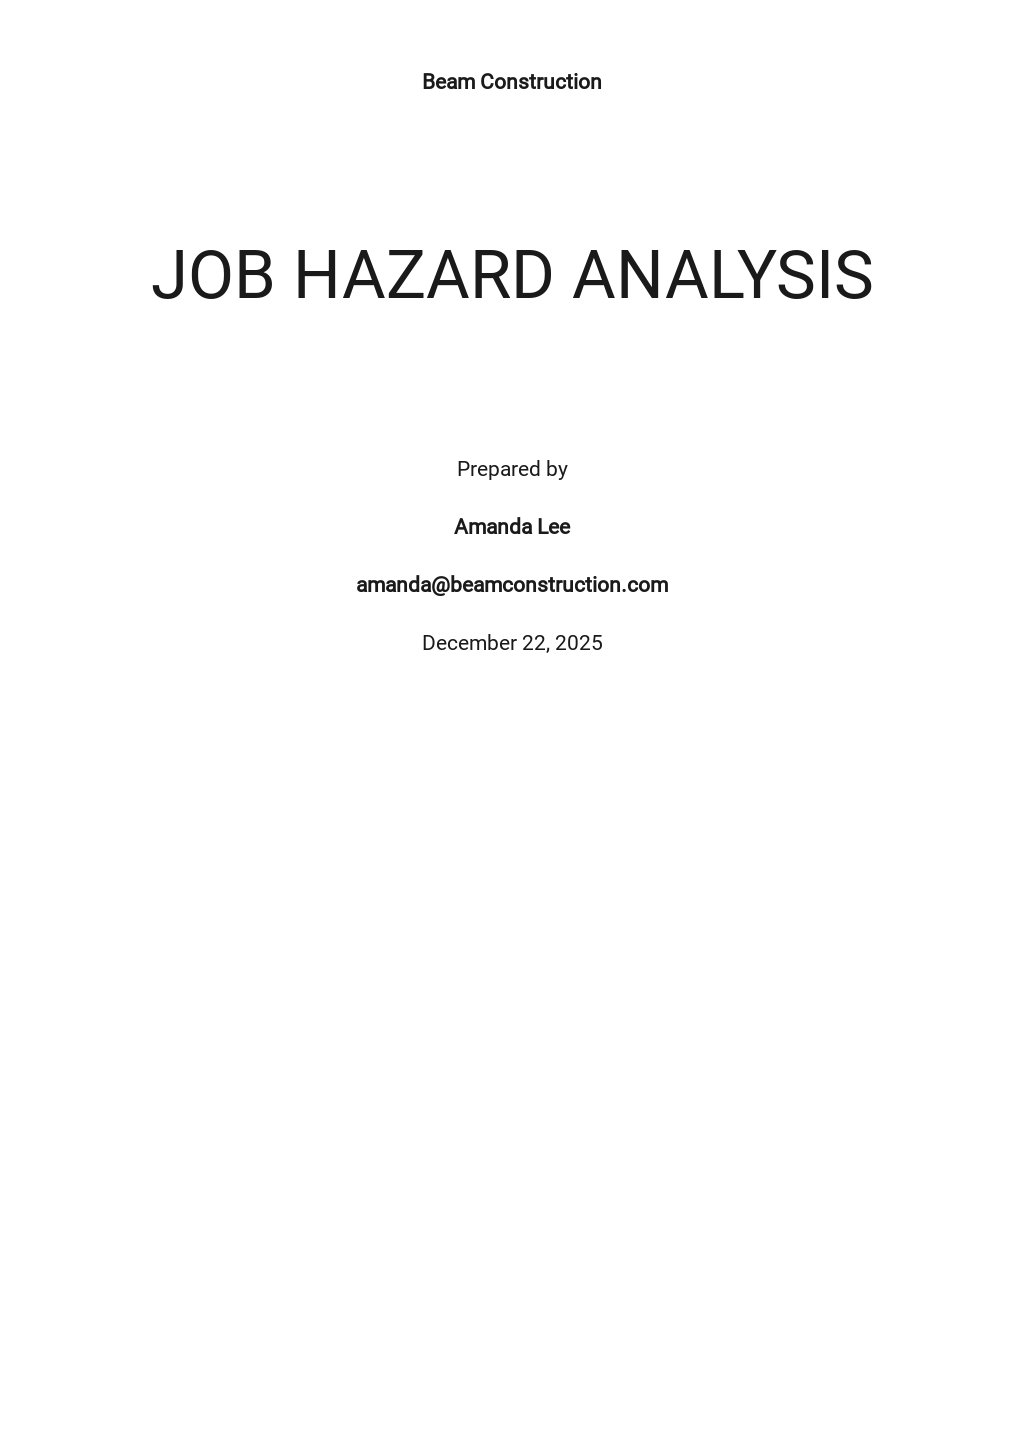 Job Hazard Analysis Template.jpe